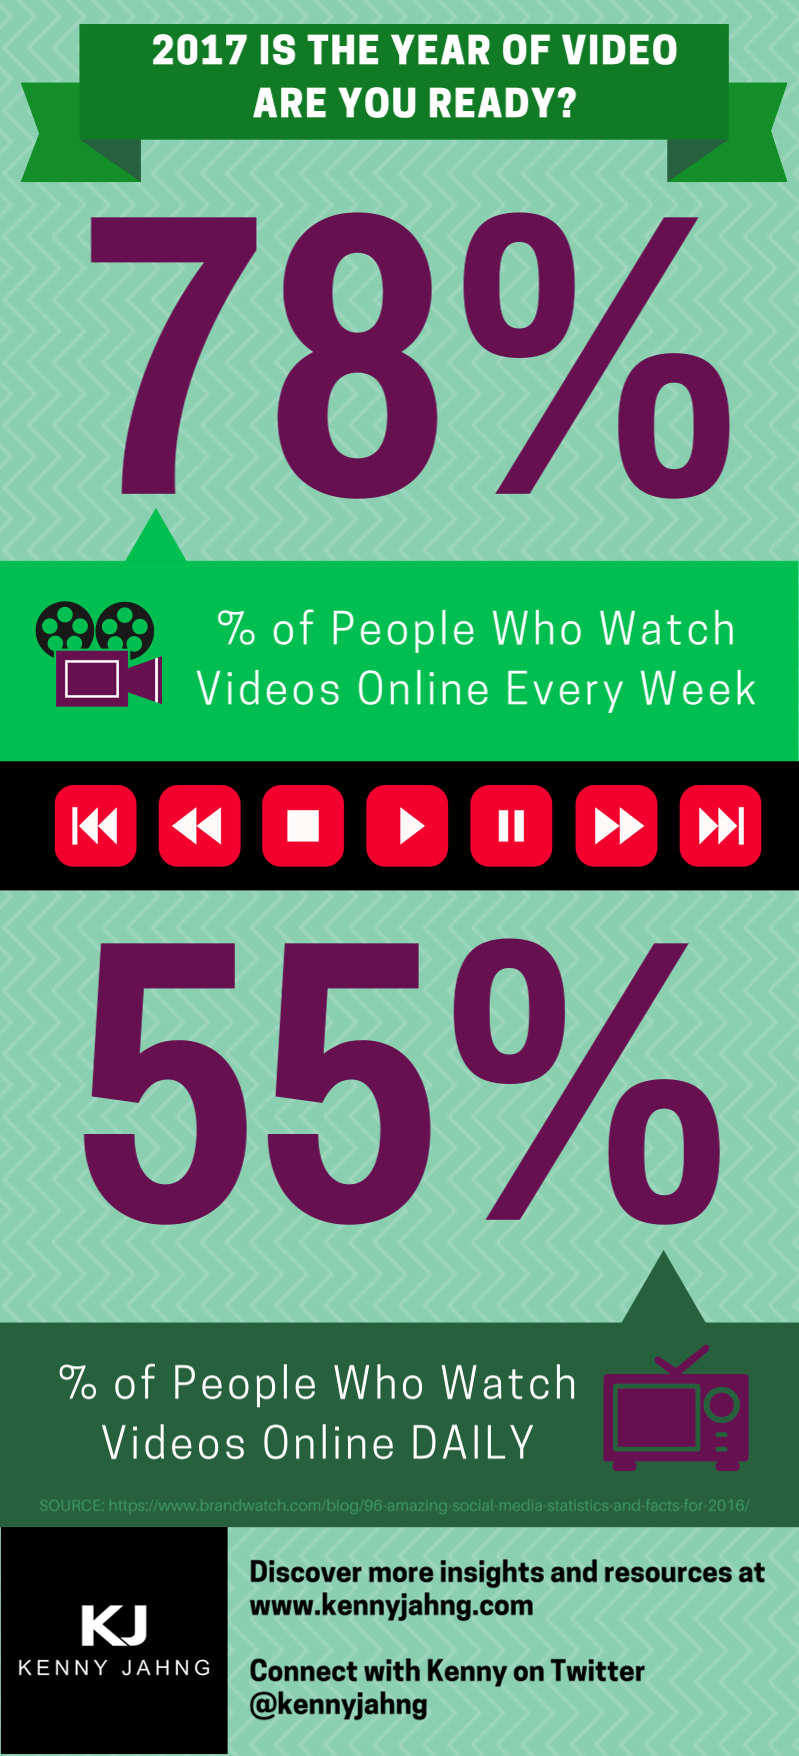 Video Usage Statistics 2017